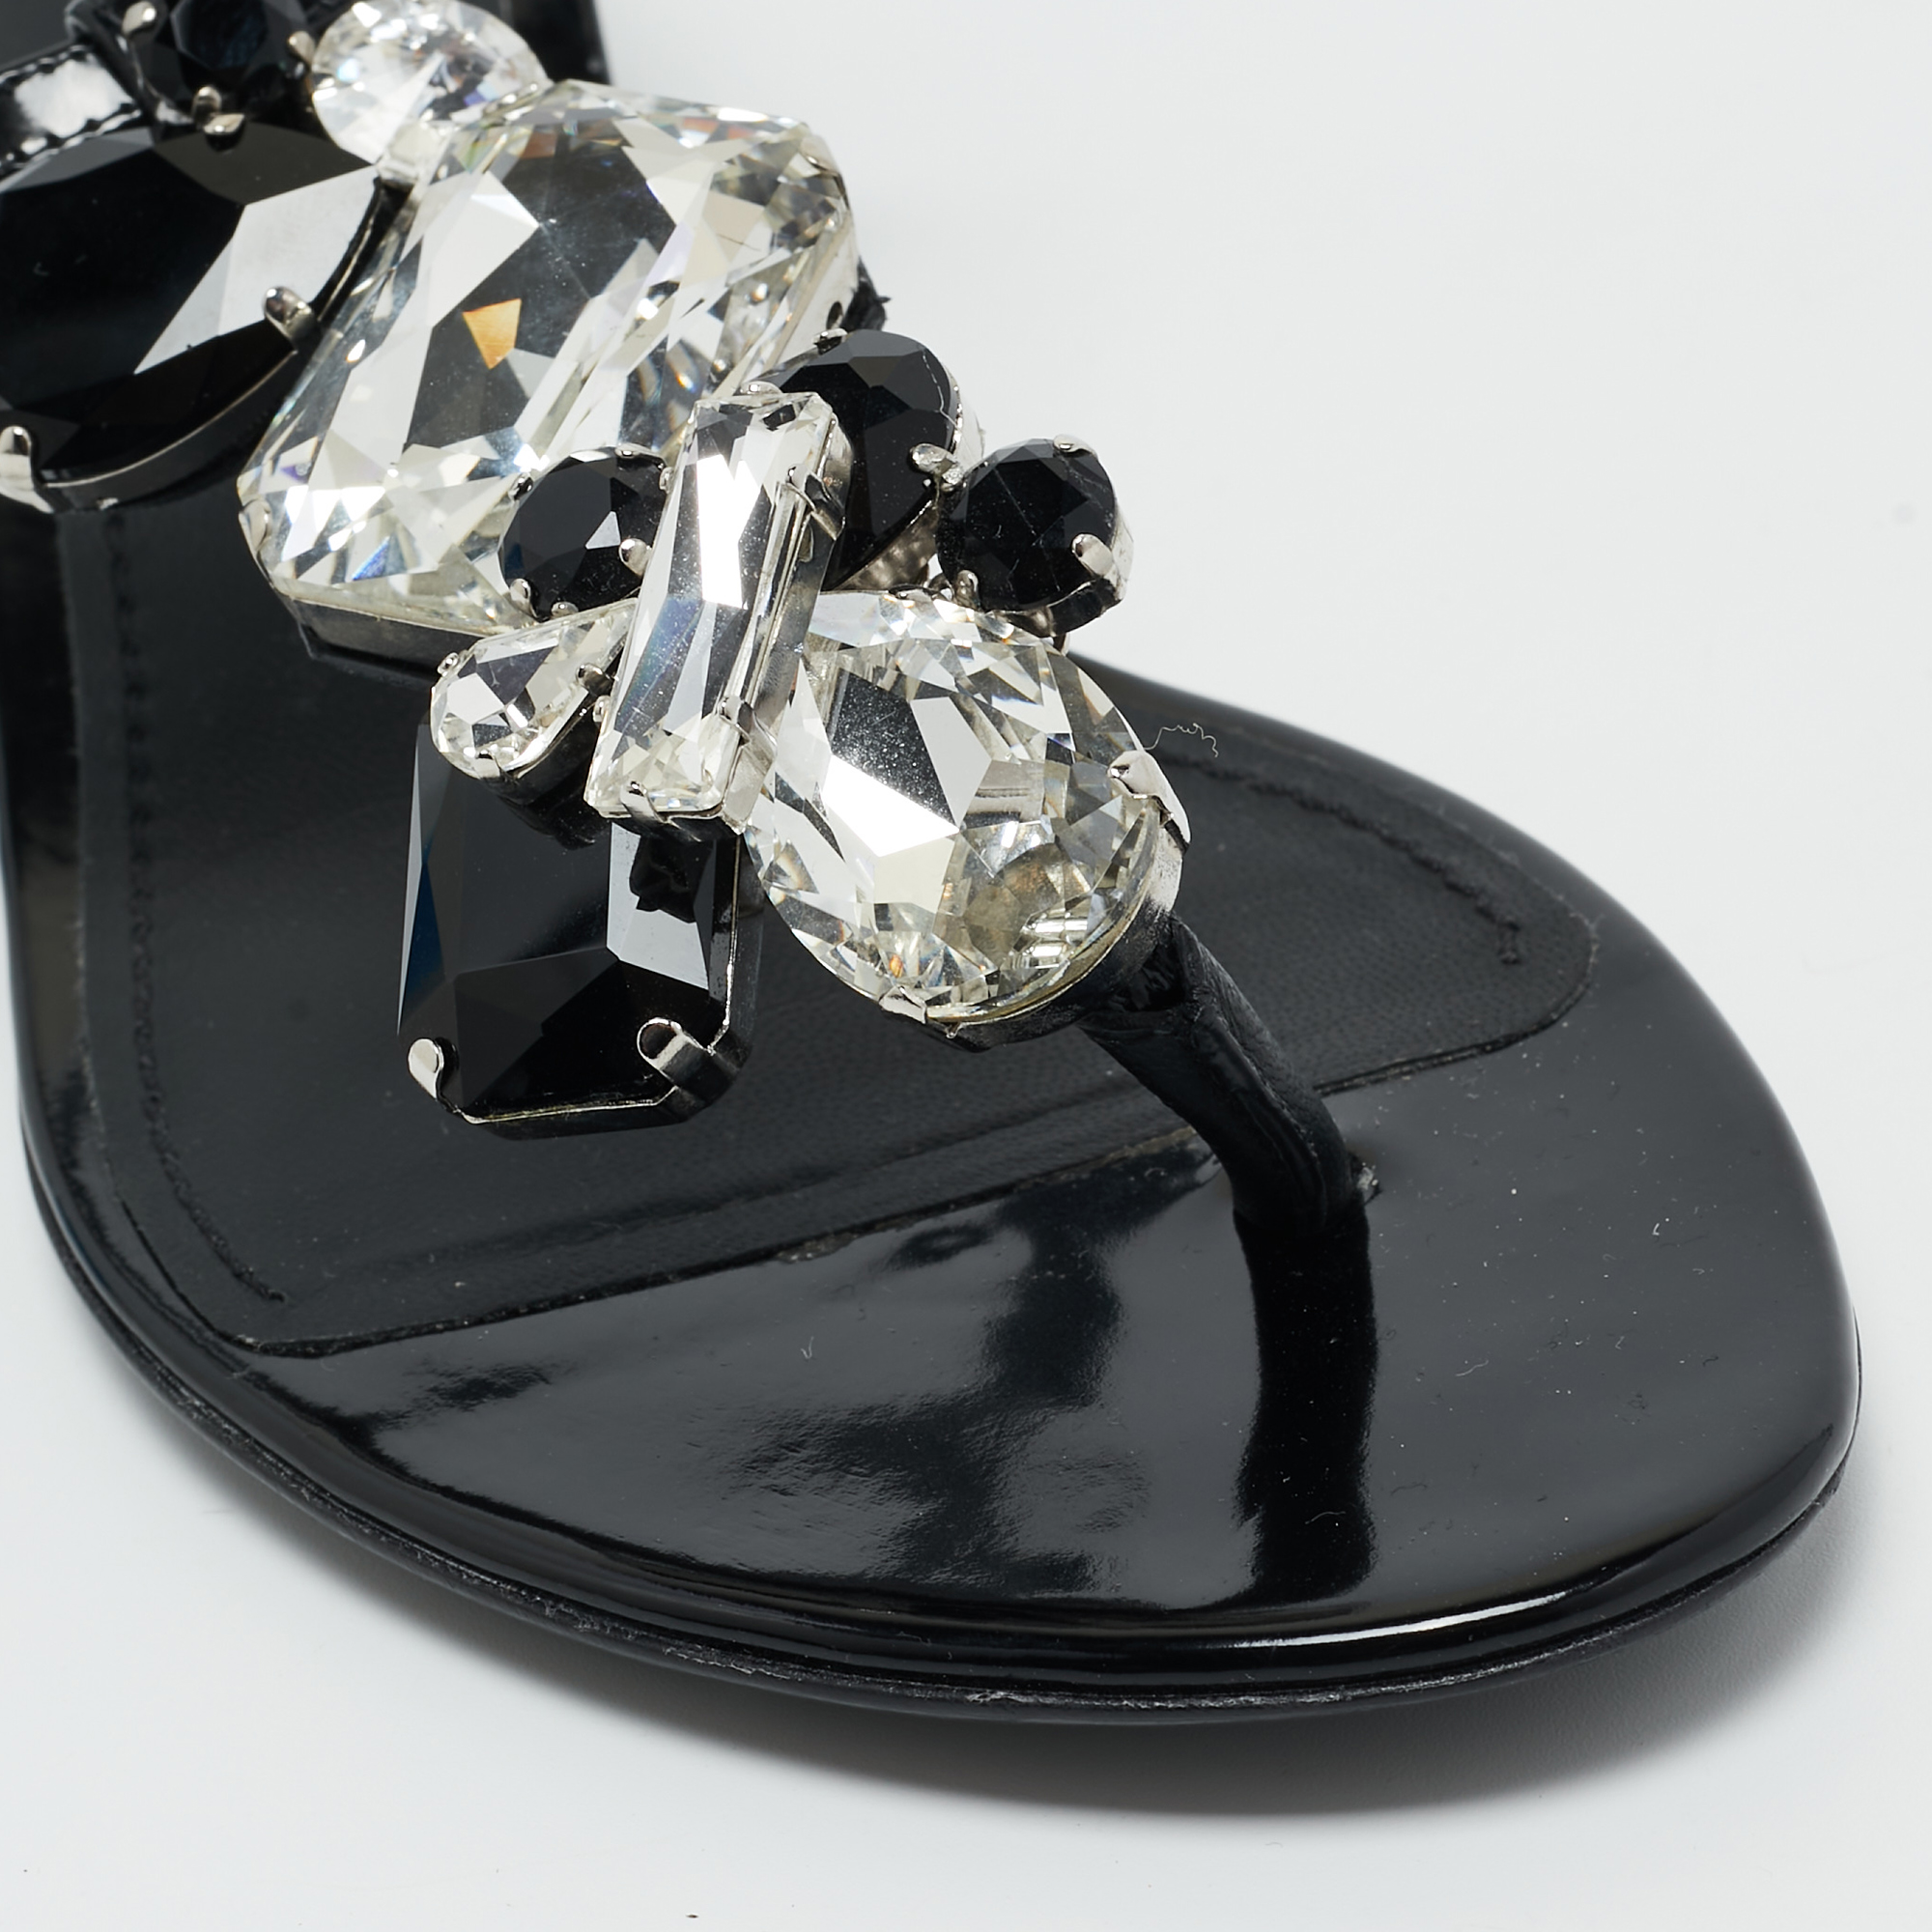 Dolce & Gabbana Black Patent Leather Crystal Embellished Ankle Strap Sandals Size 37